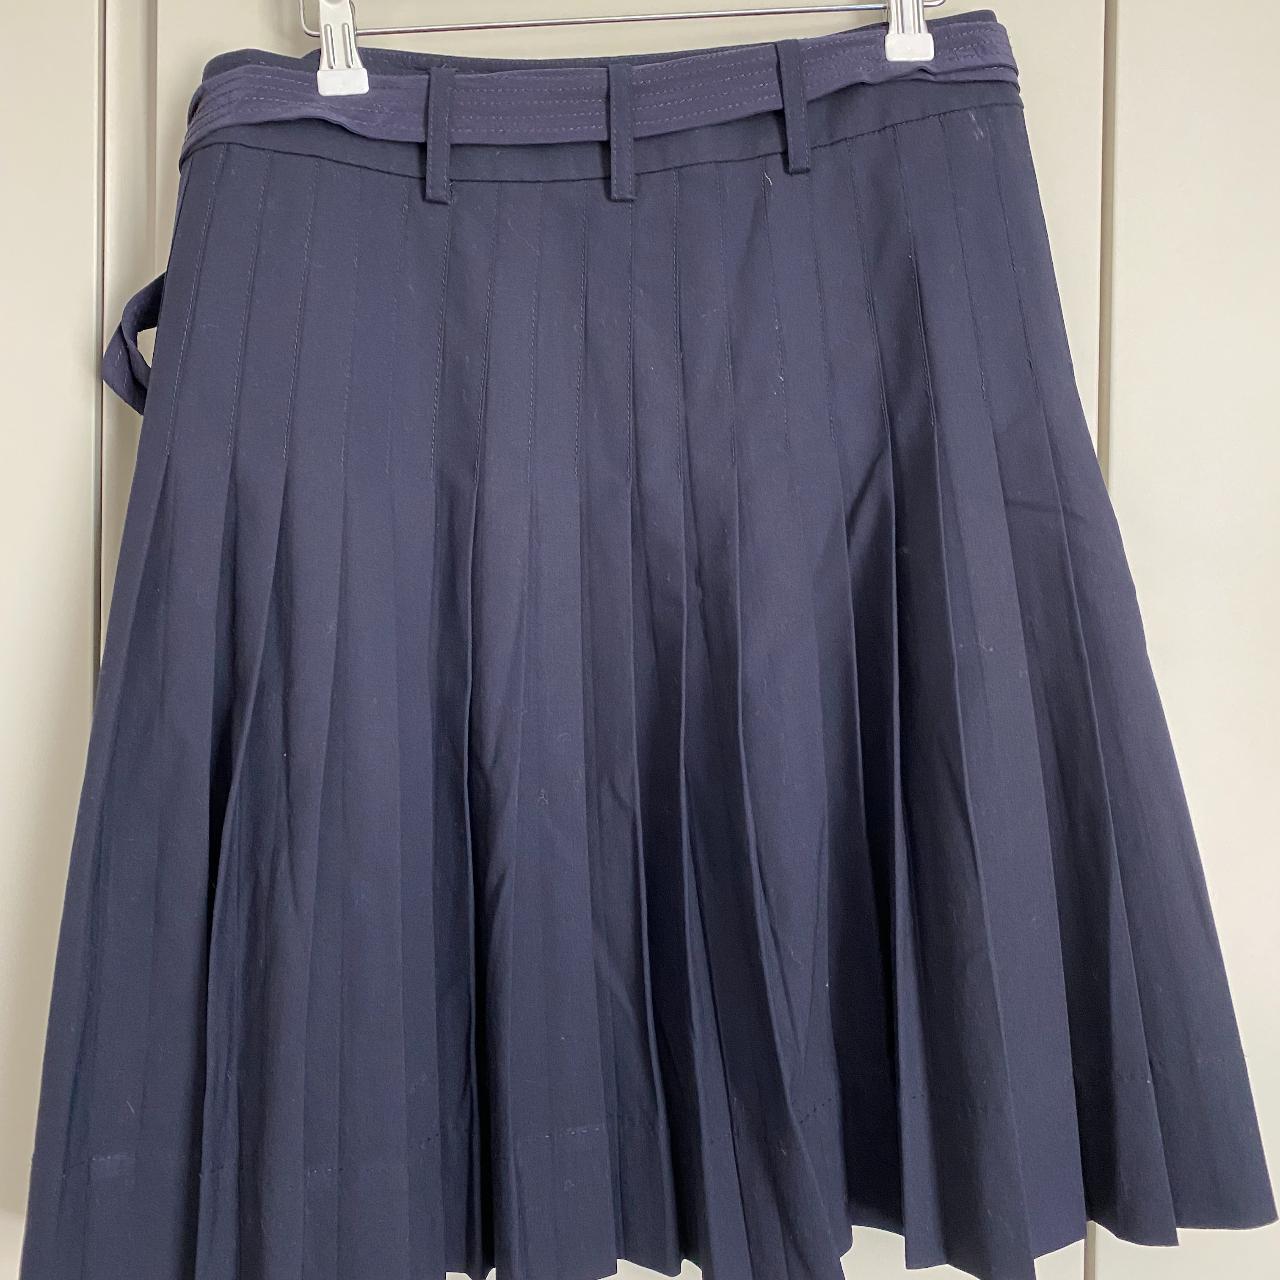 Tori Birch Pleaed Mini skirt in navy with belted... - Depop